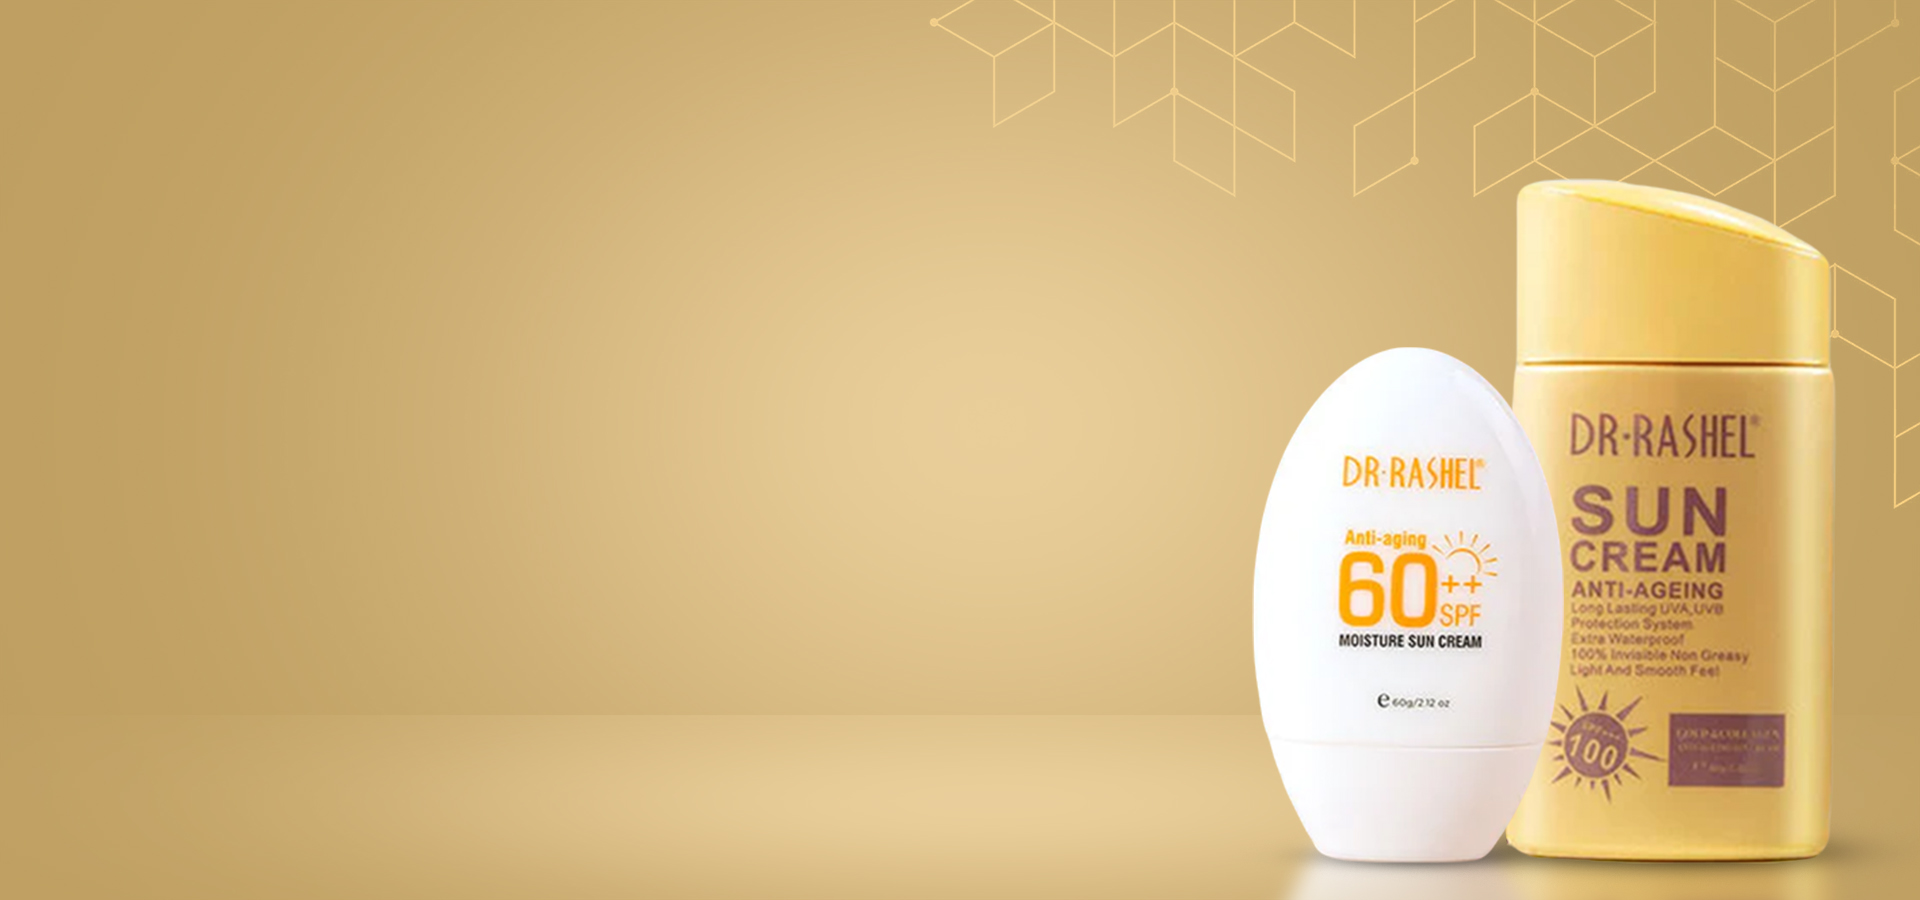 Sun Cream Duo: 60g & 80g Anti-Aging